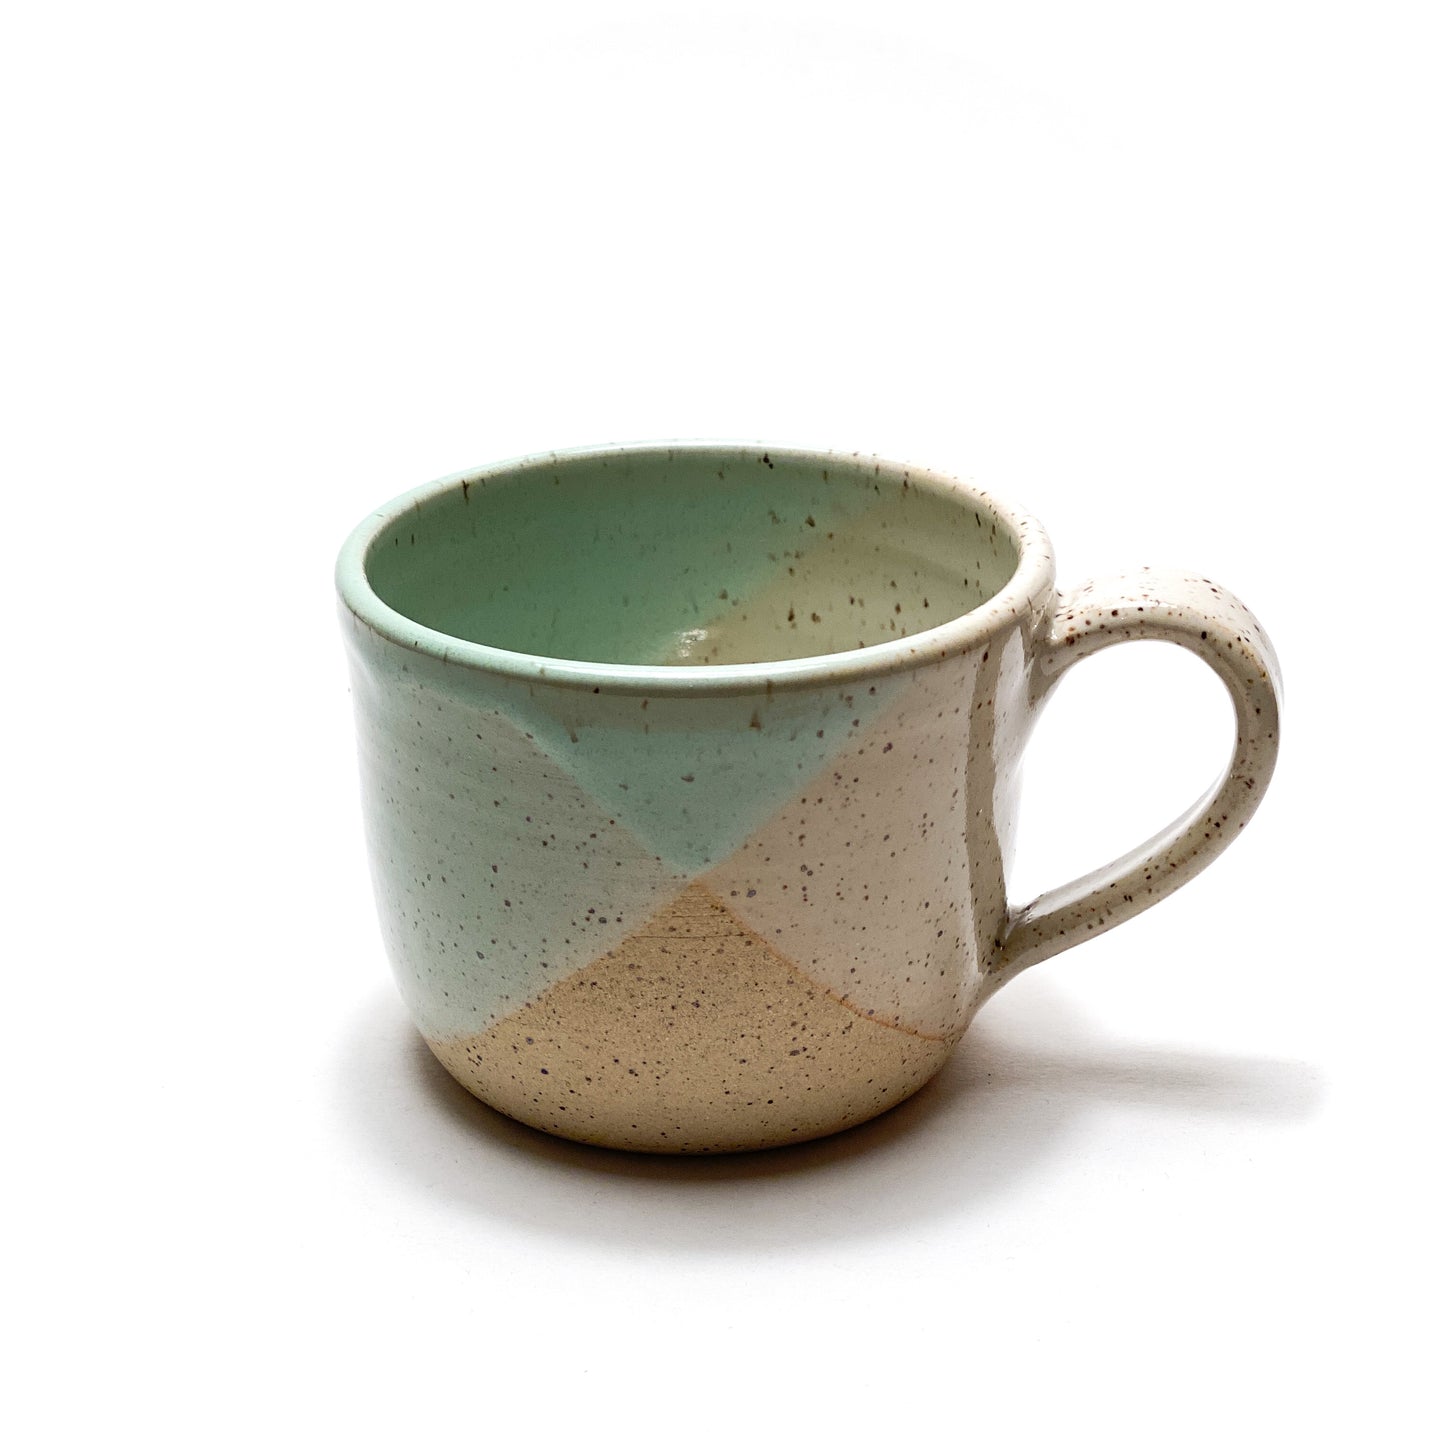 Sydsicle Ceramics Handled Mug Regular